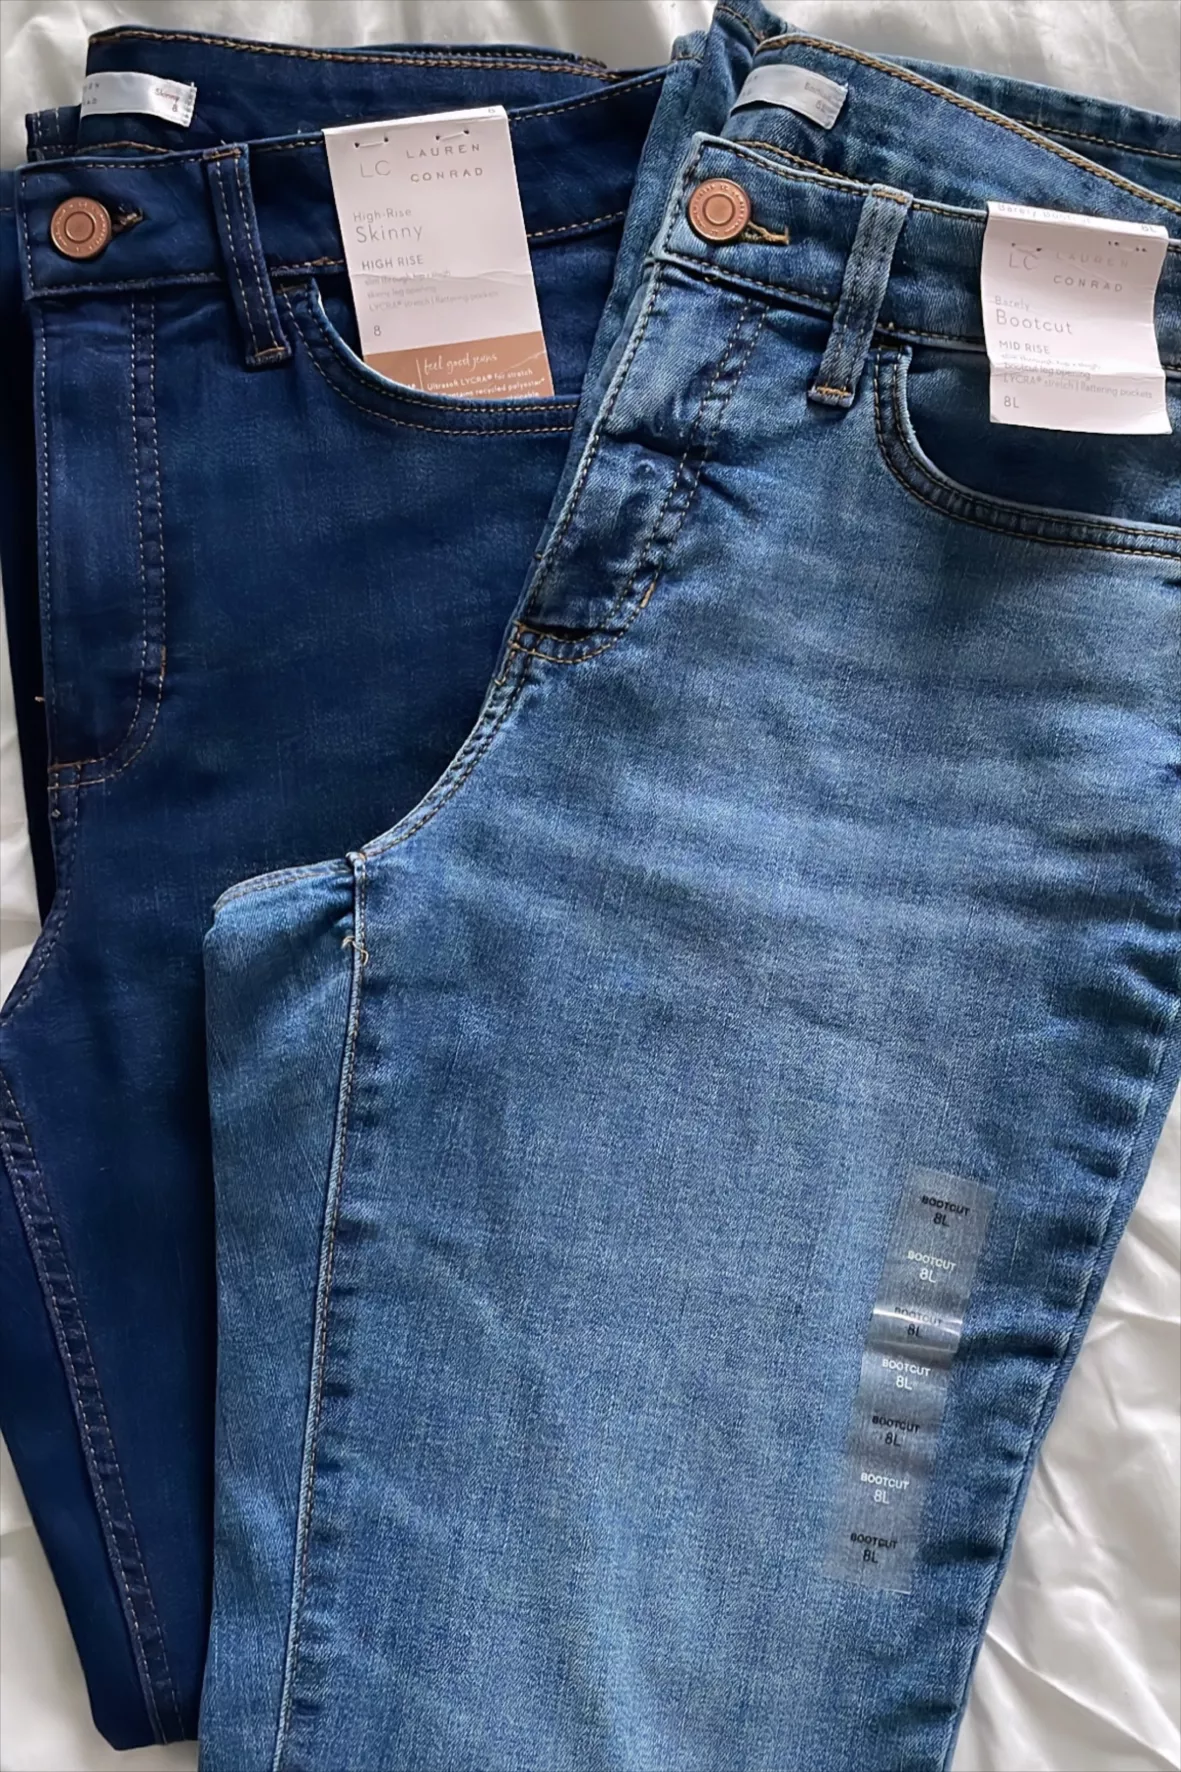 Women's LC Lauren Conrad High Rise Skinny Jeans